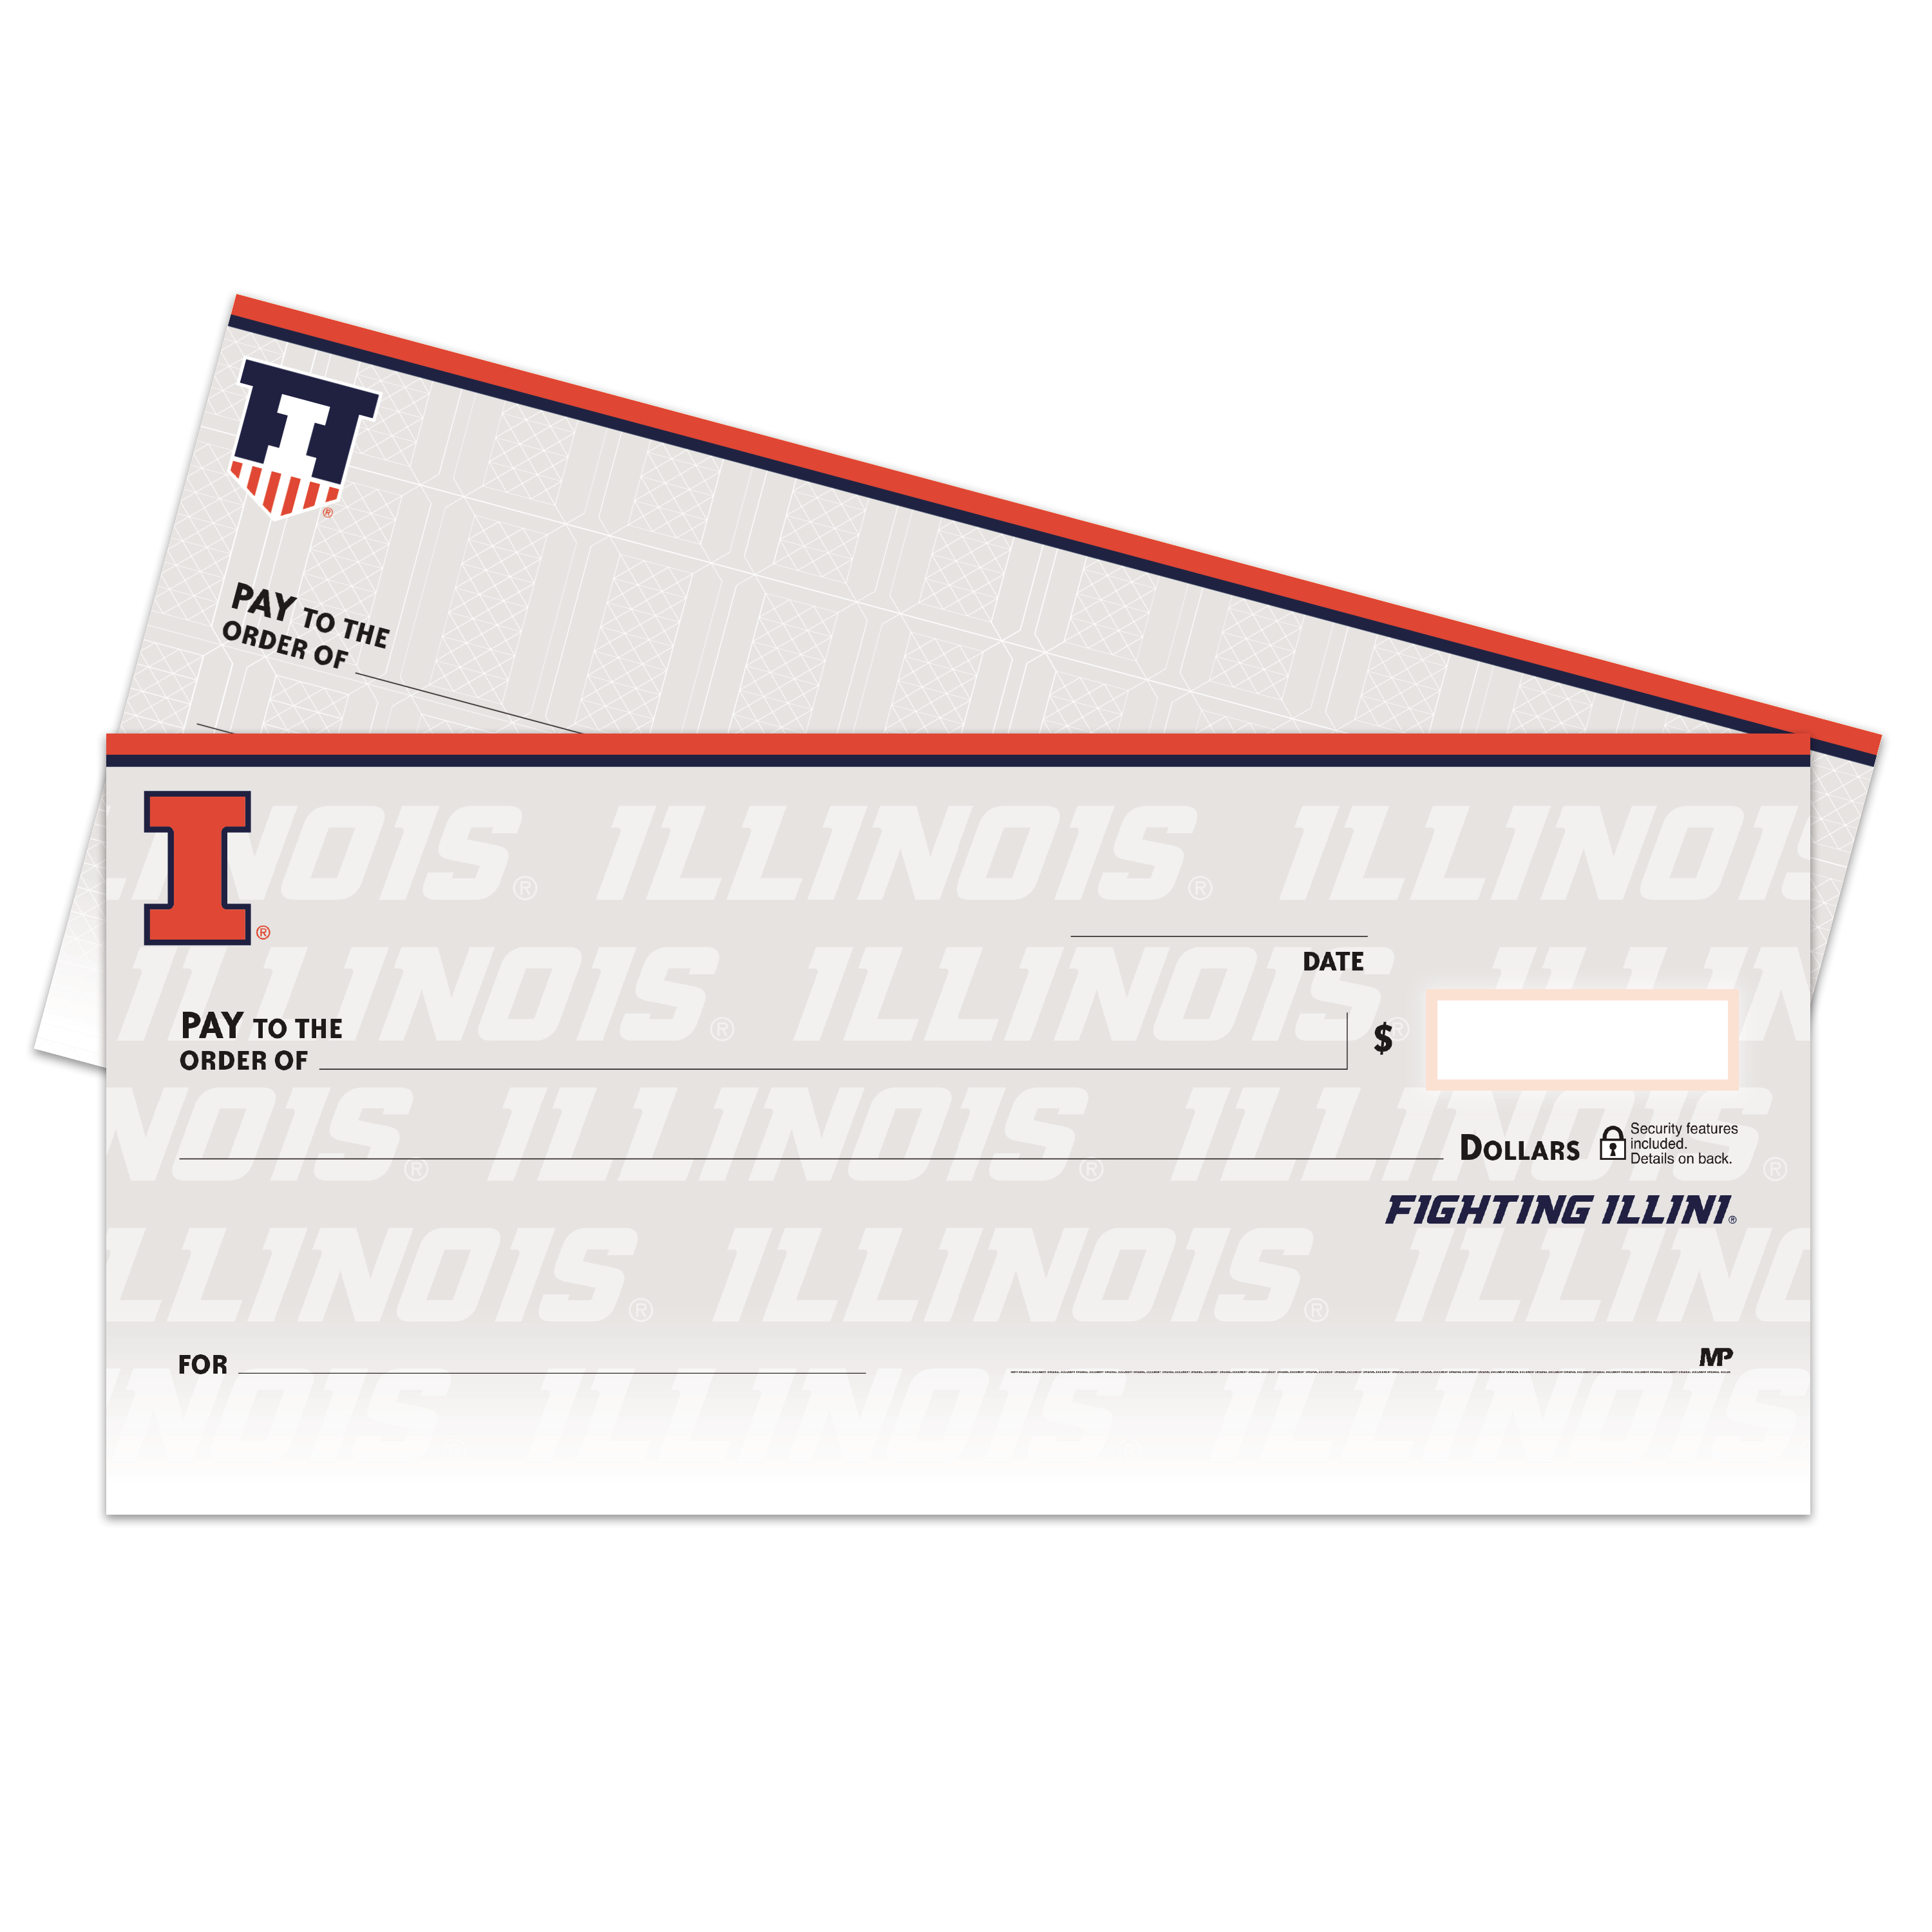 University of Illinois Checks